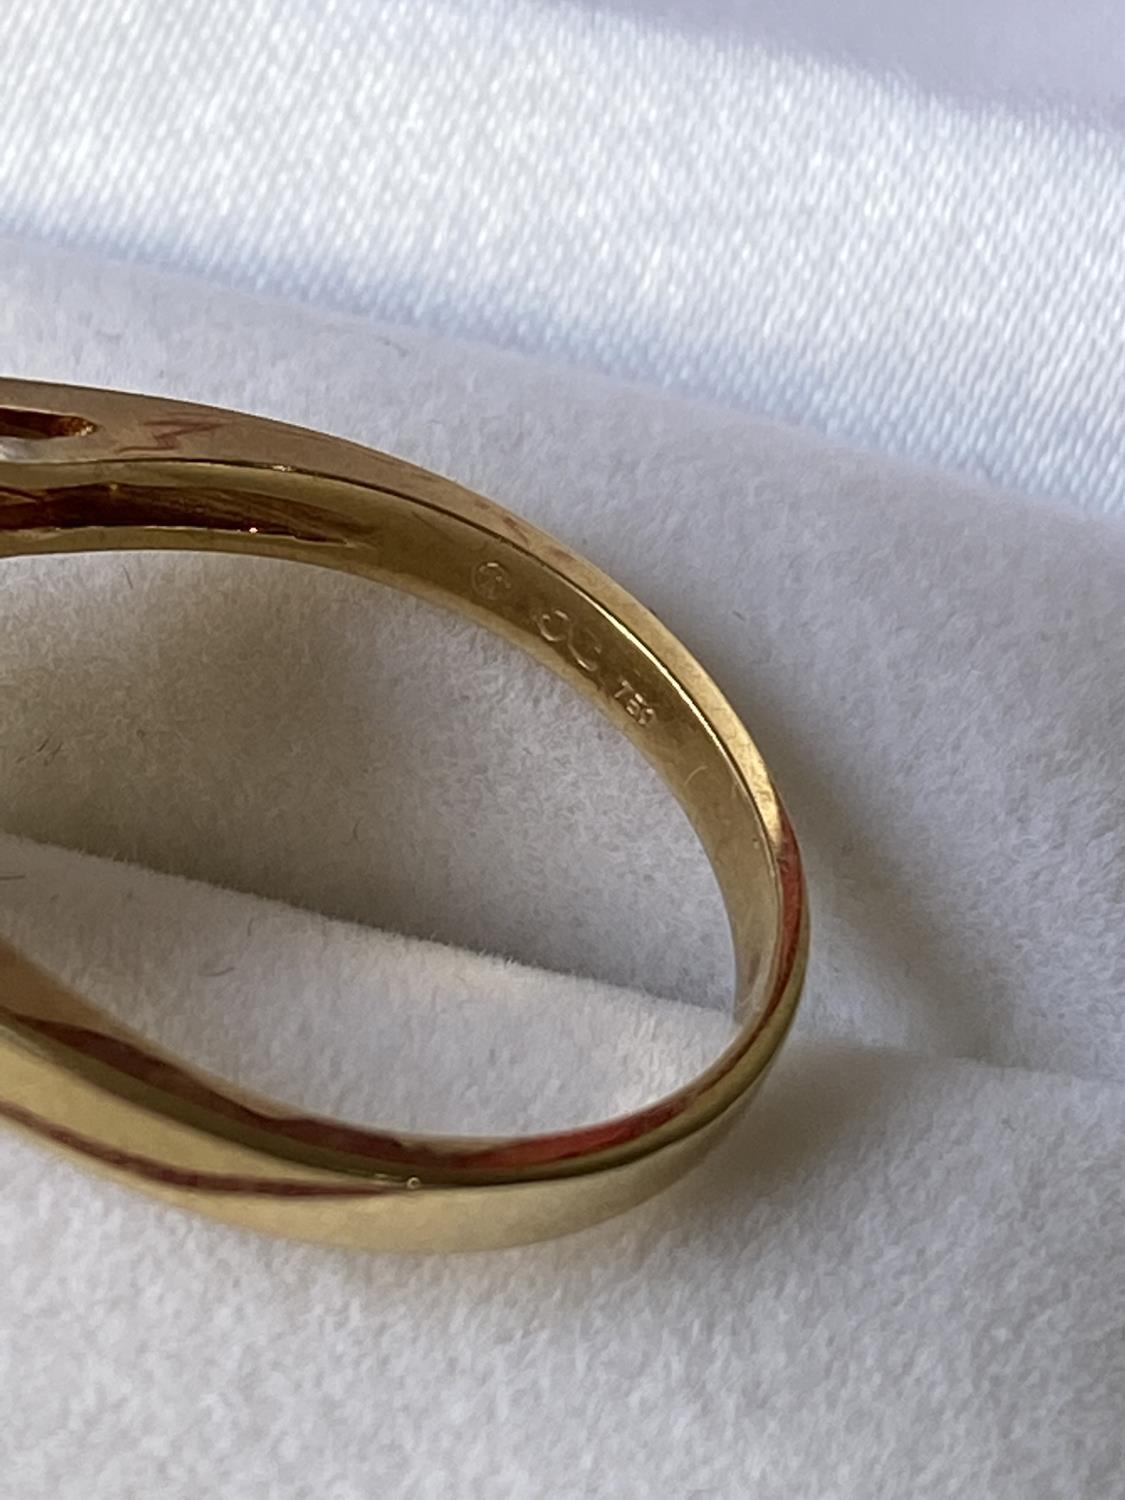 An 18ct gold ladies diamond & ruby set ring [size M] [4.13g] - Image 11 of 12